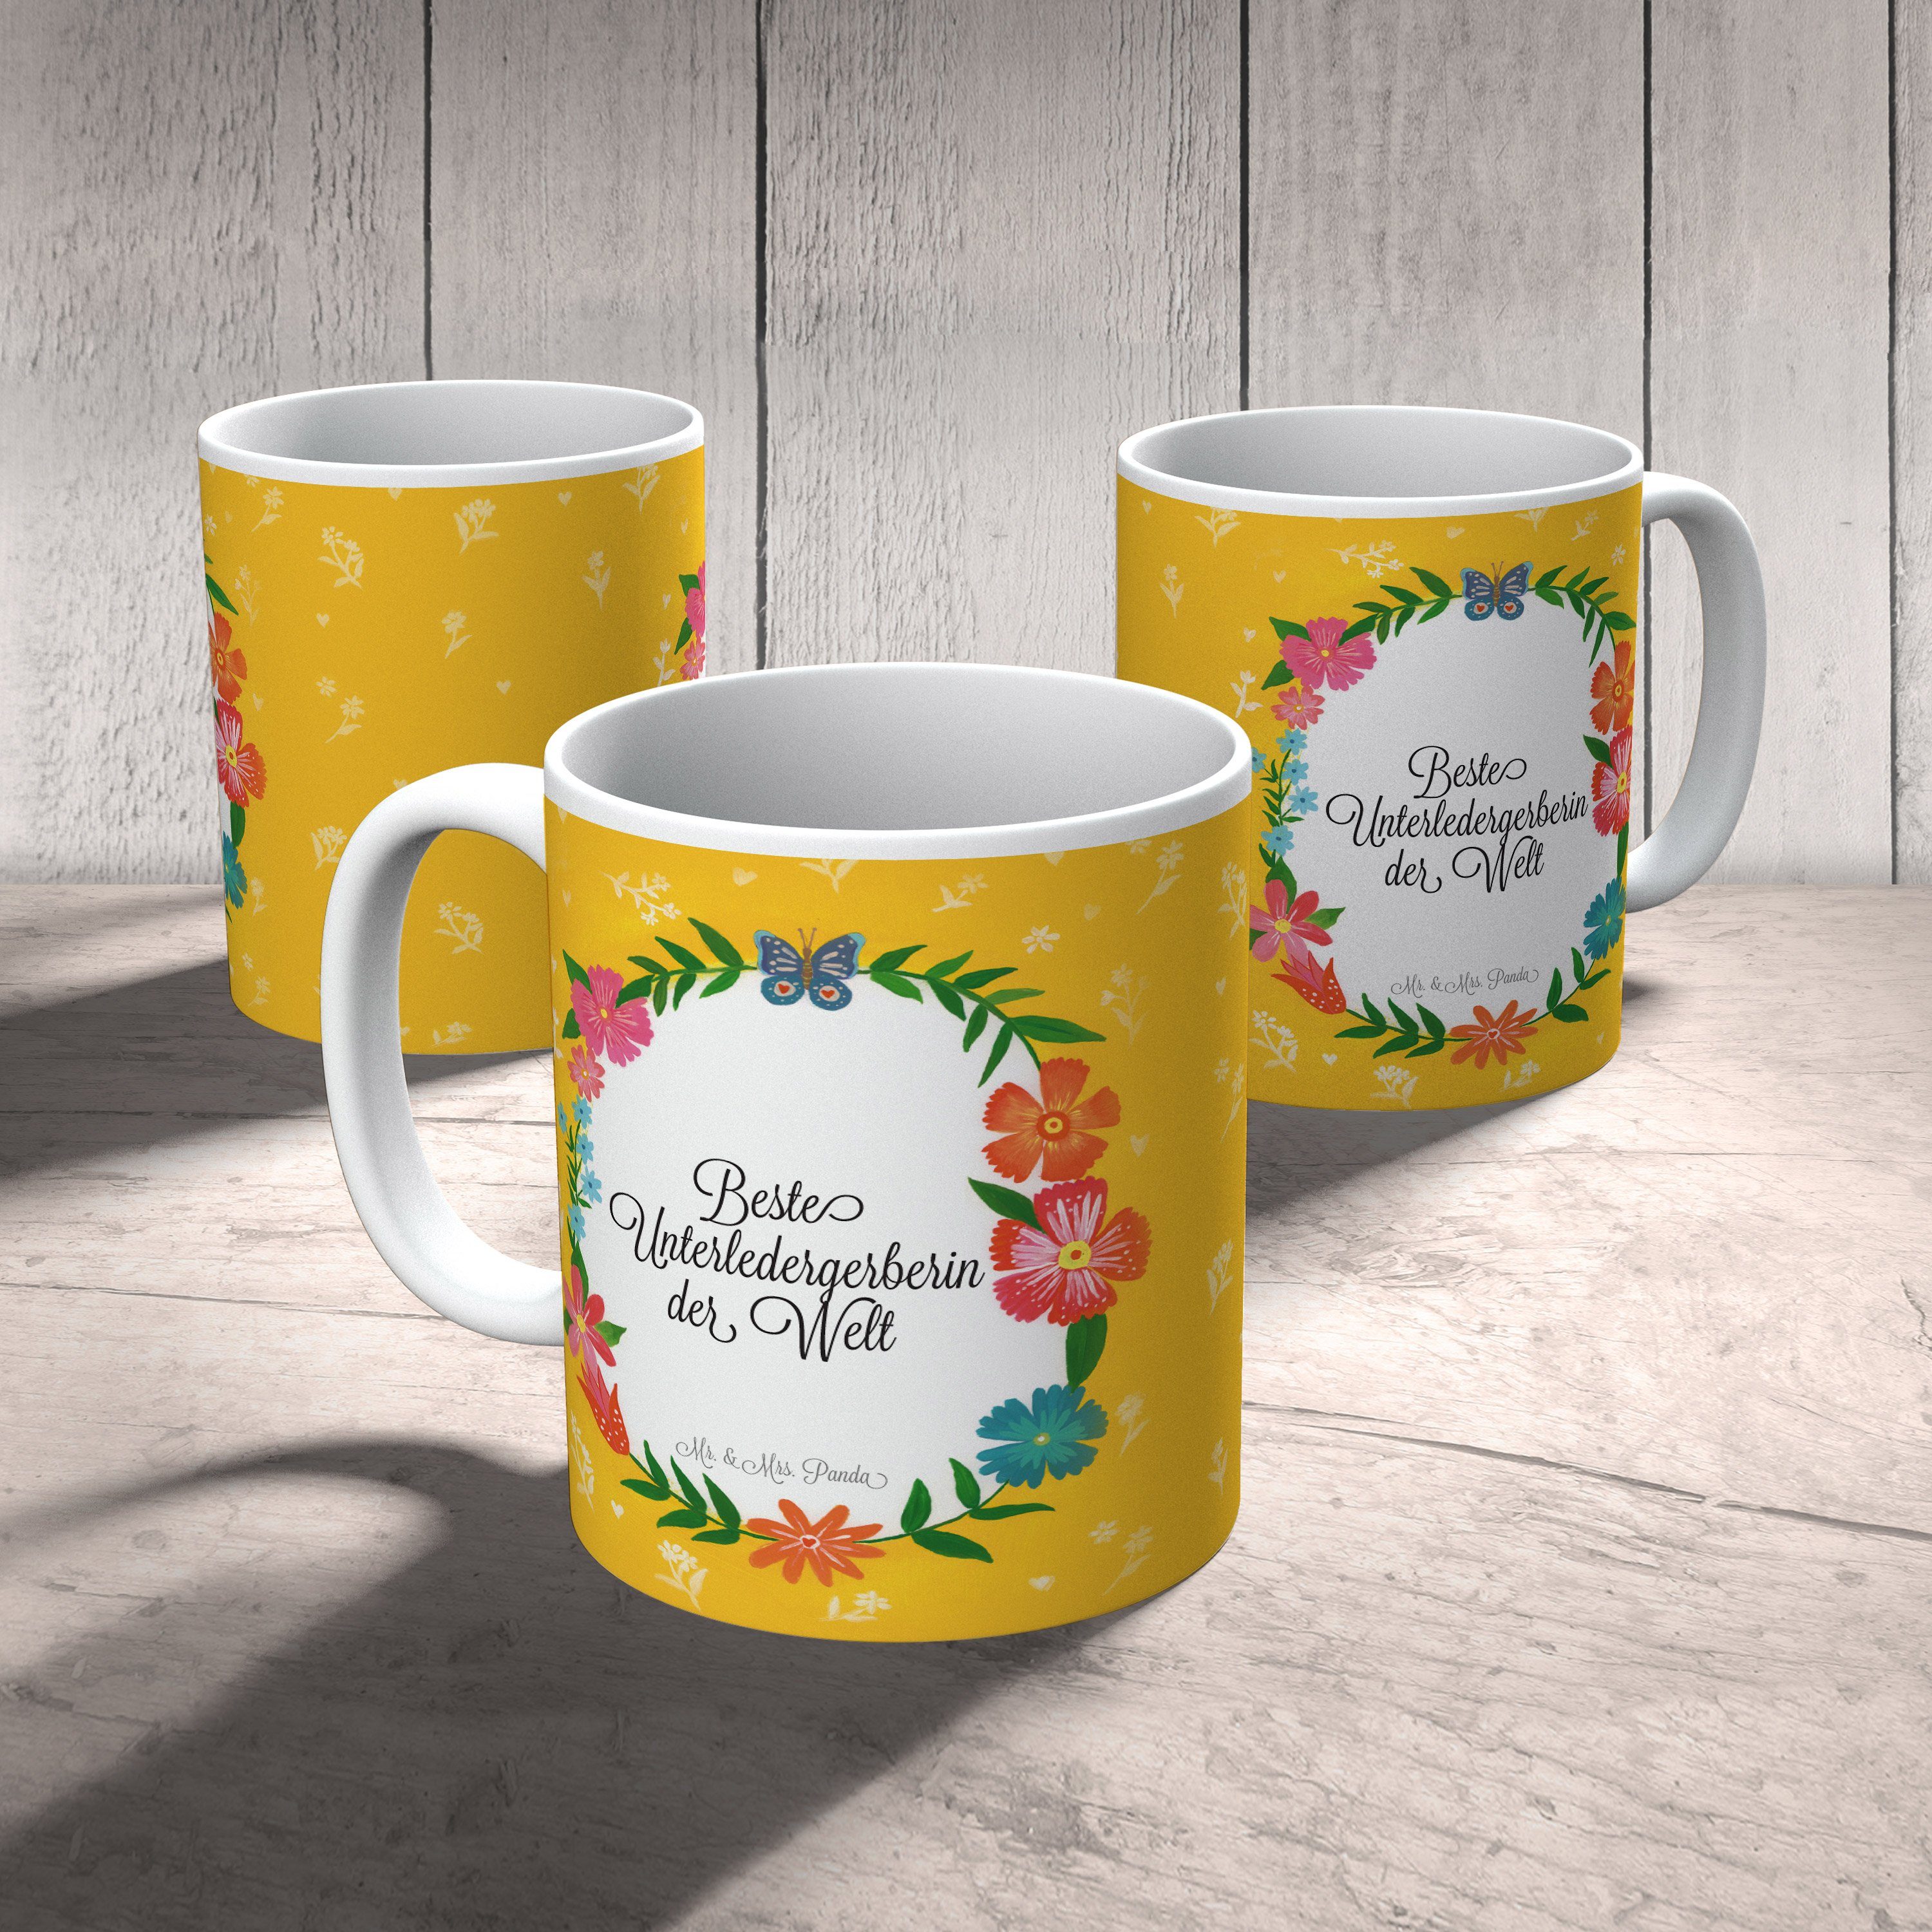 Mr. & Mrs. Panda Tasse, Geschenk - Keramik Kaffeetasse, Unterledergerberin Tasse Studium, Geschenk